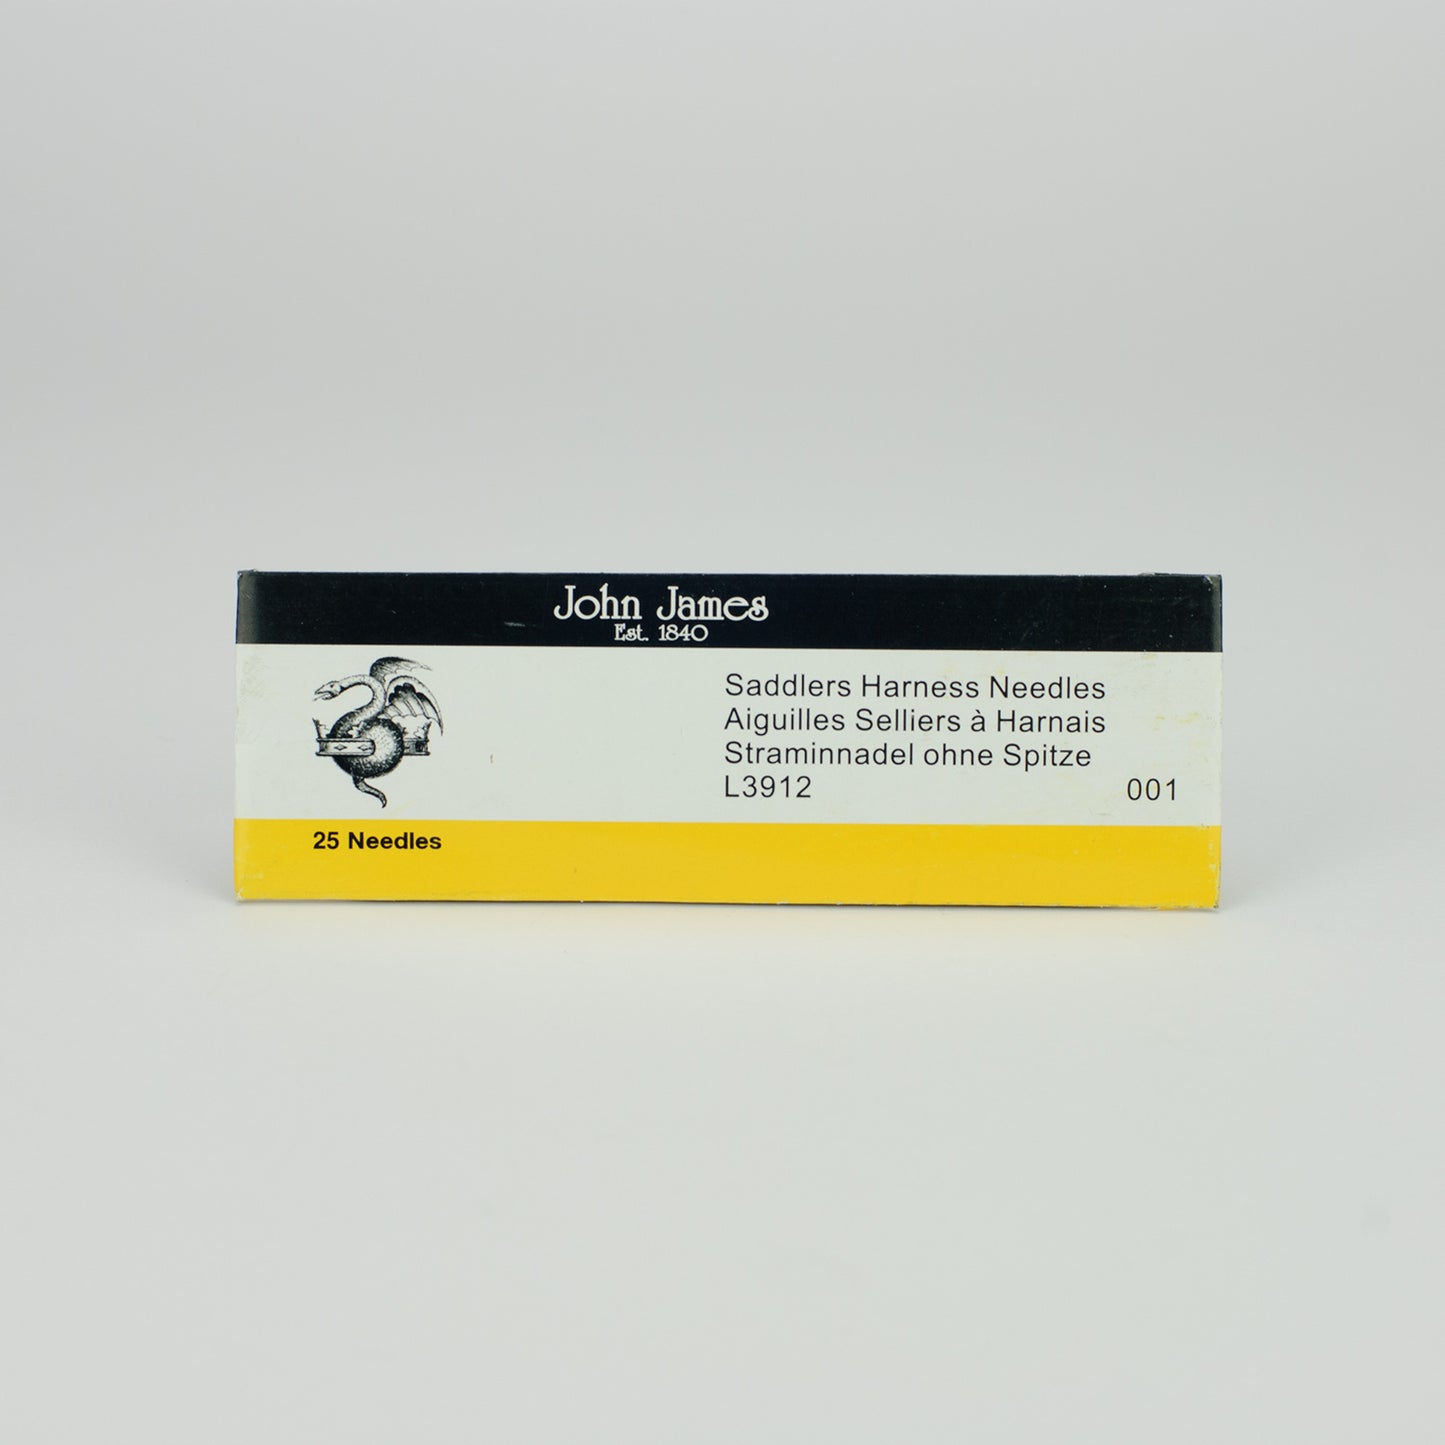 25 John James Saddlers Harness Needles 001 size